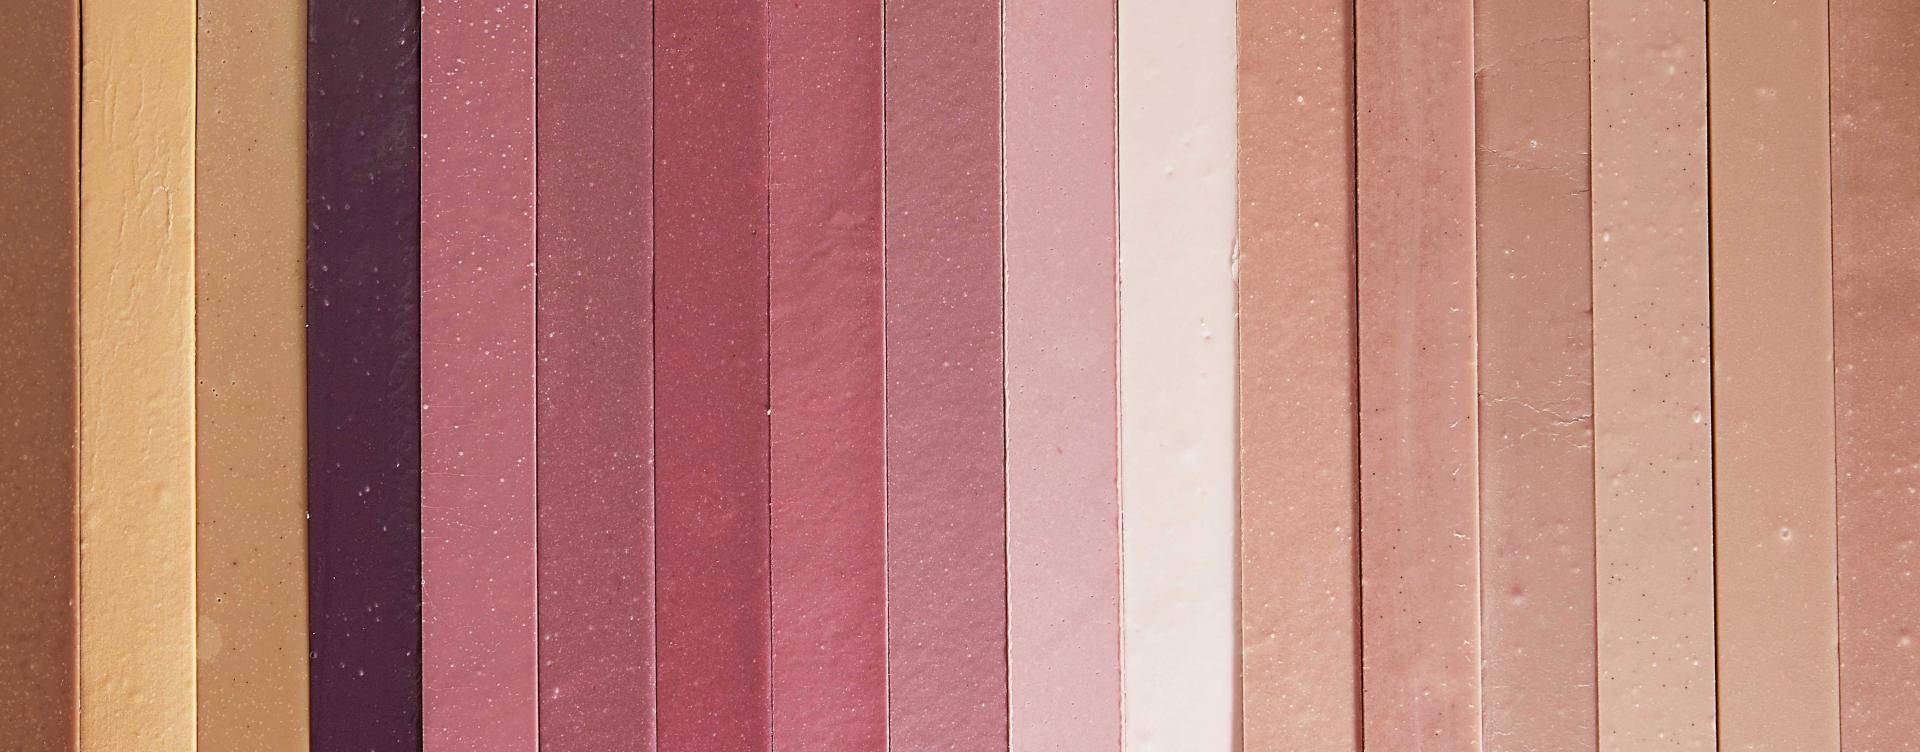 strips of ruby ganache in a gradient